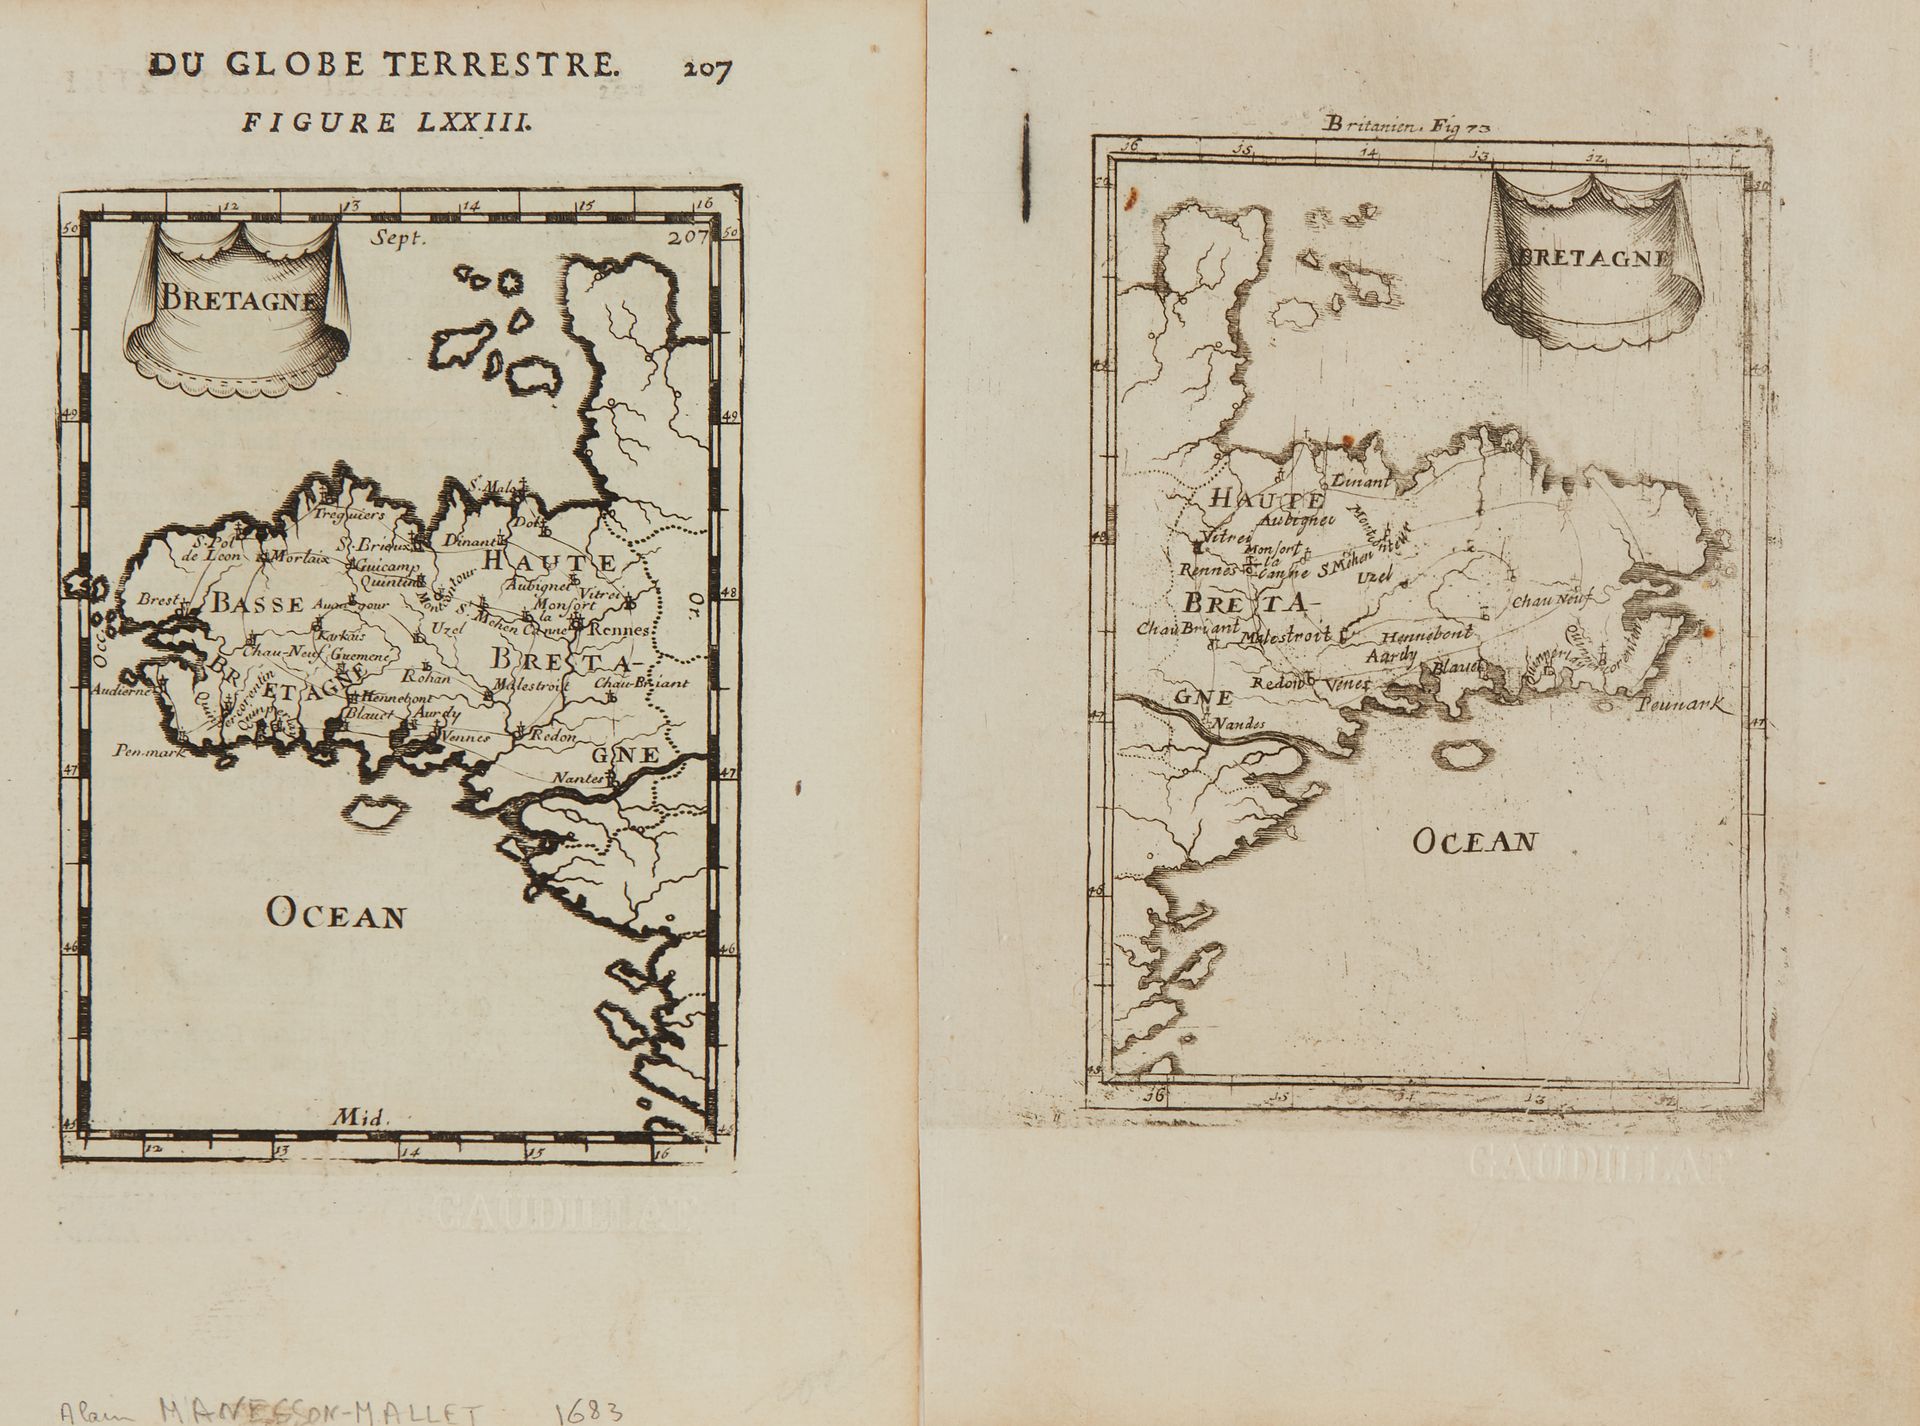 Null MANESSON-MALLET, A. Bretagne.巴黎，1683年。黑与白。两张地图，其中一张是颠倒的。150 x 100 mm。





&hellip;